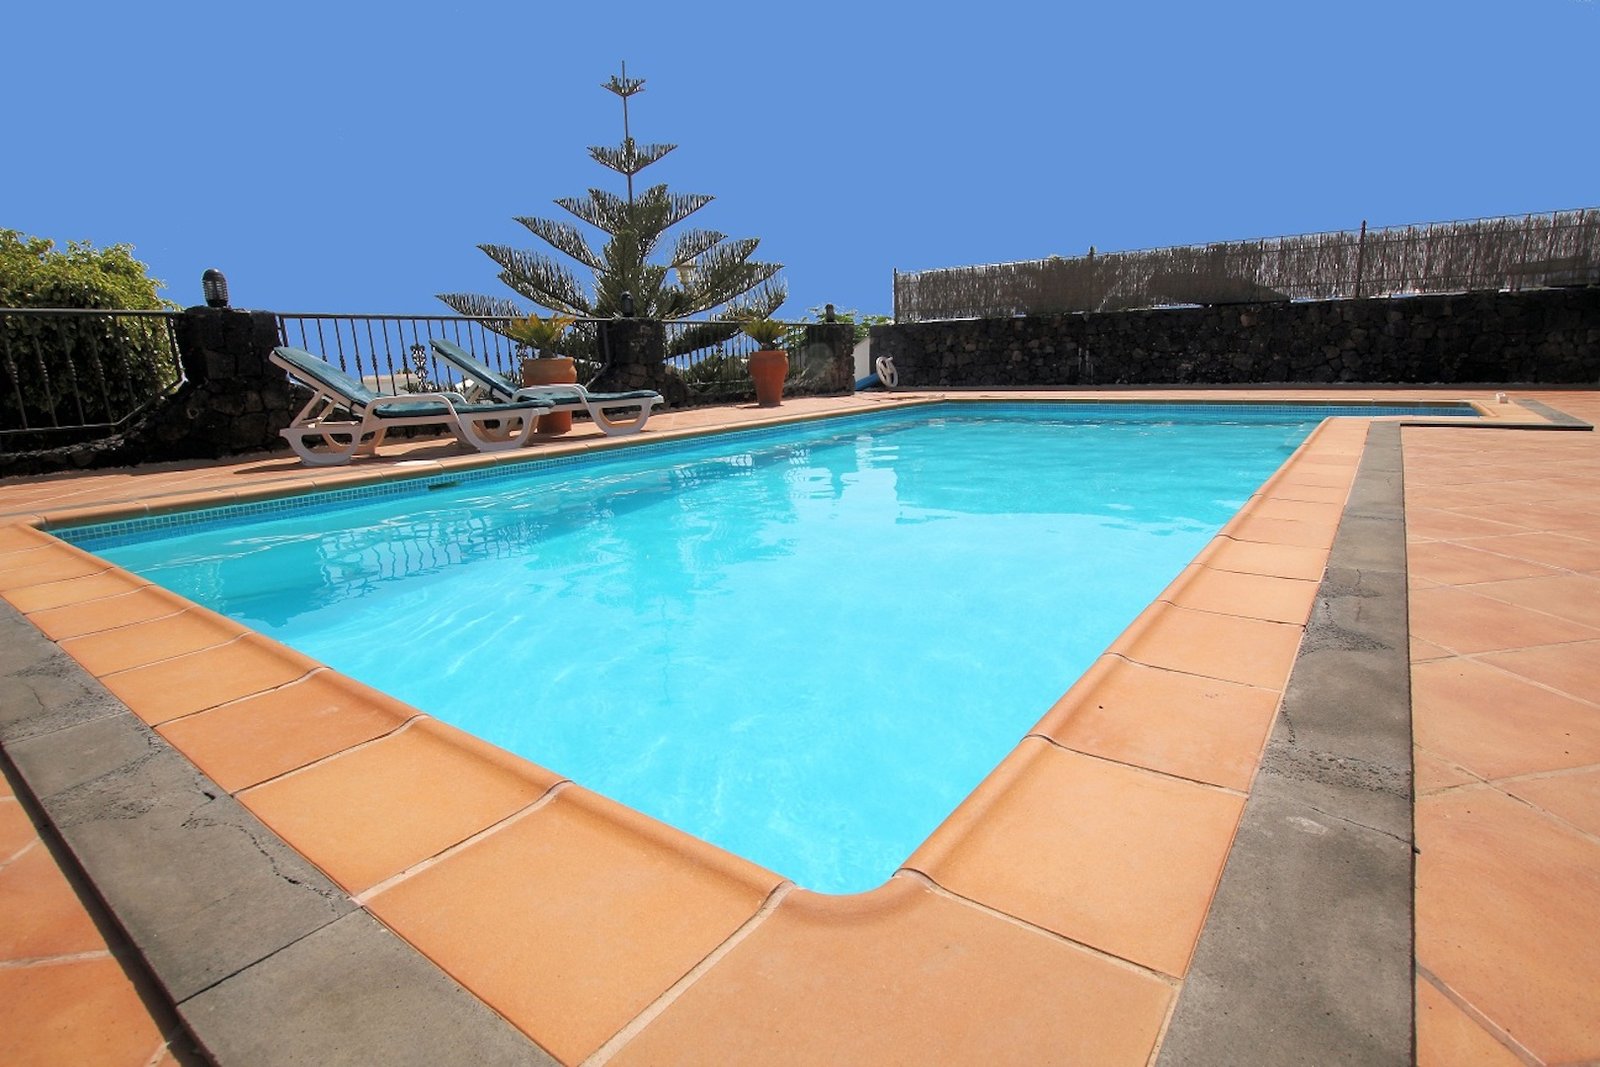 Villa Rosso - 3 bedroom villa - sleeps 6 people - Sun Terrace - Heated Pool